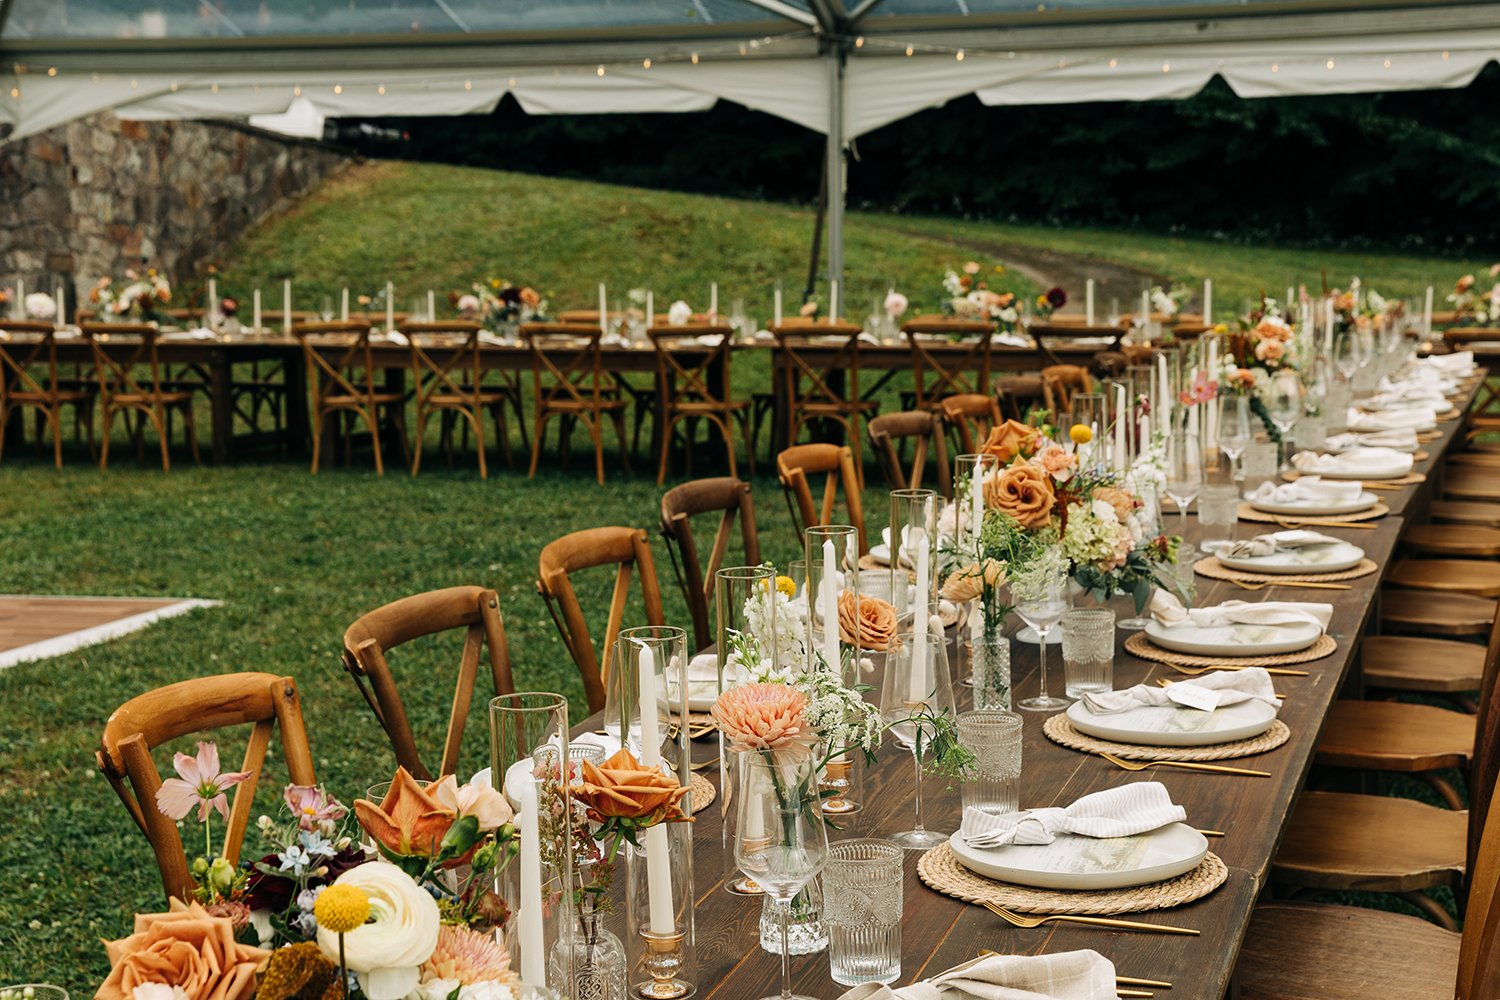  table settings at a backyard wedding in western massachusetts 